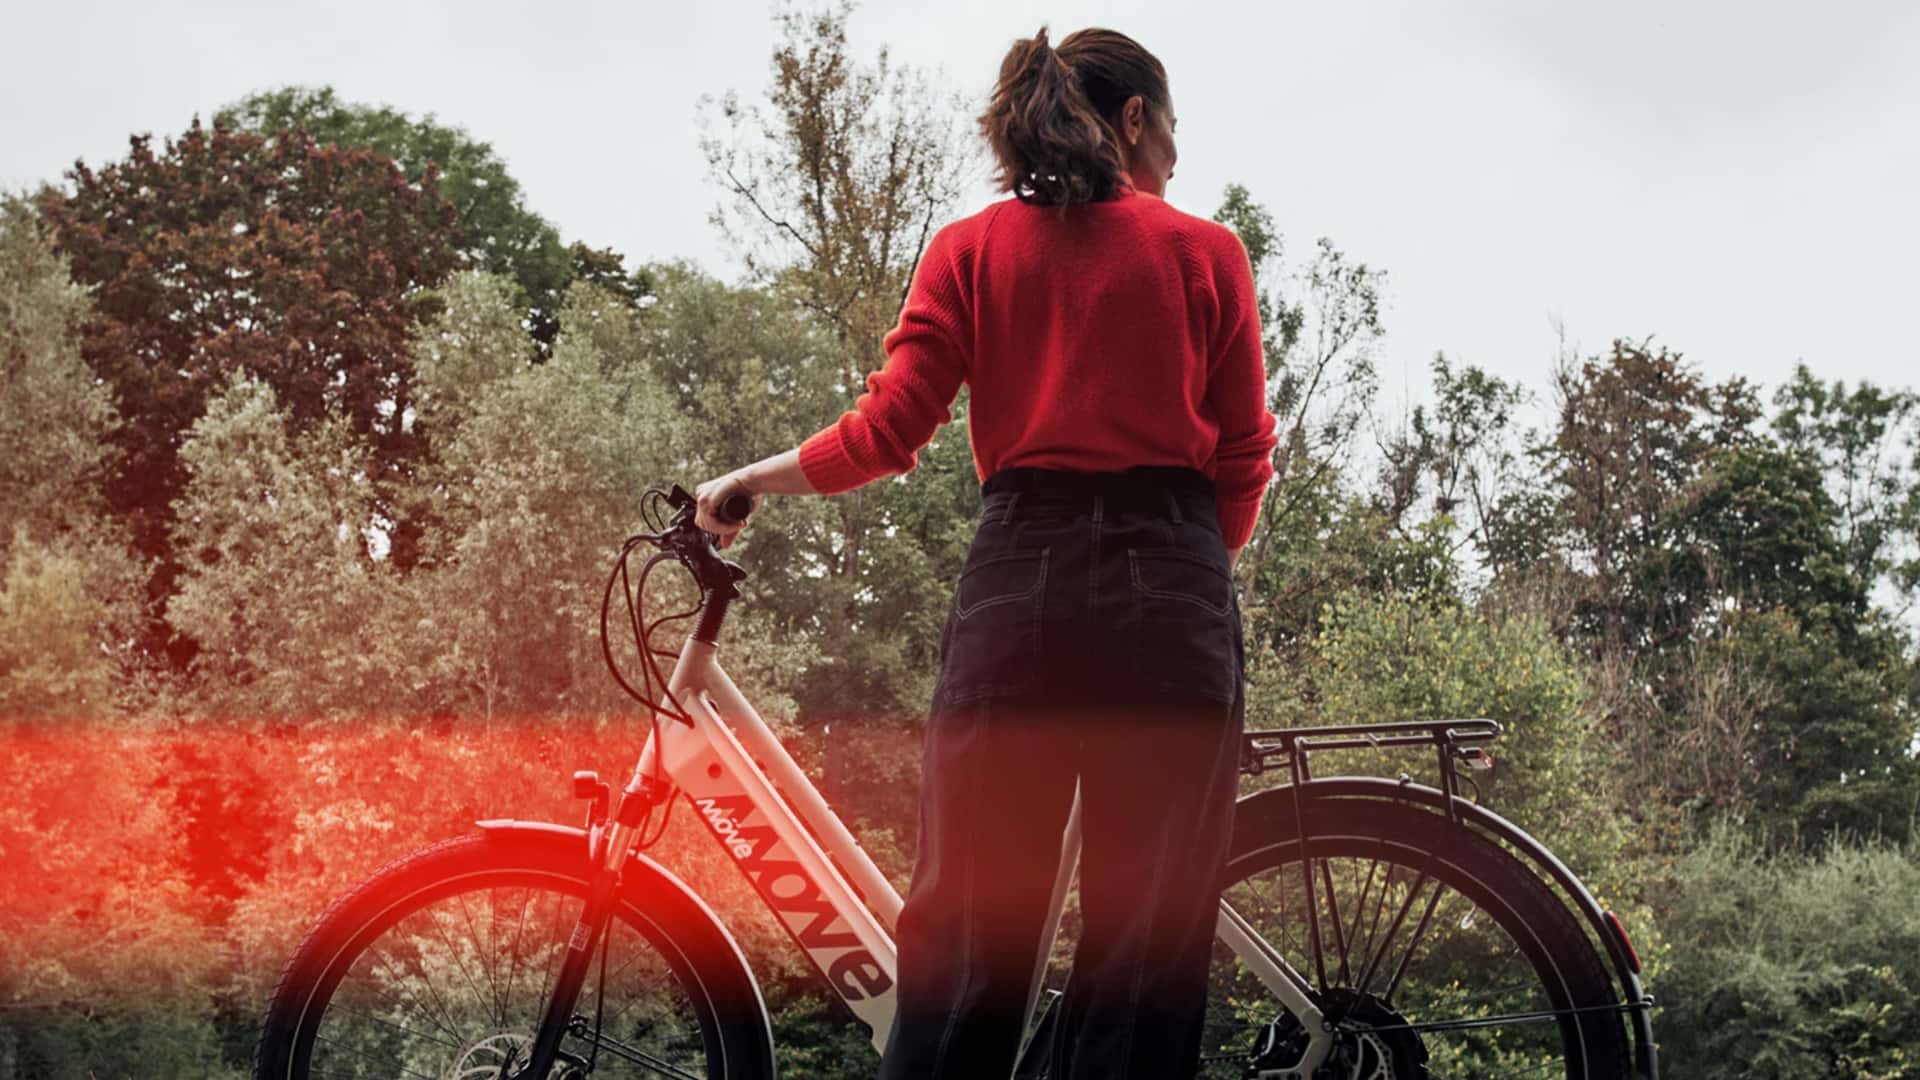 german bike brand möve presents new voyager v10 commuter e-bike